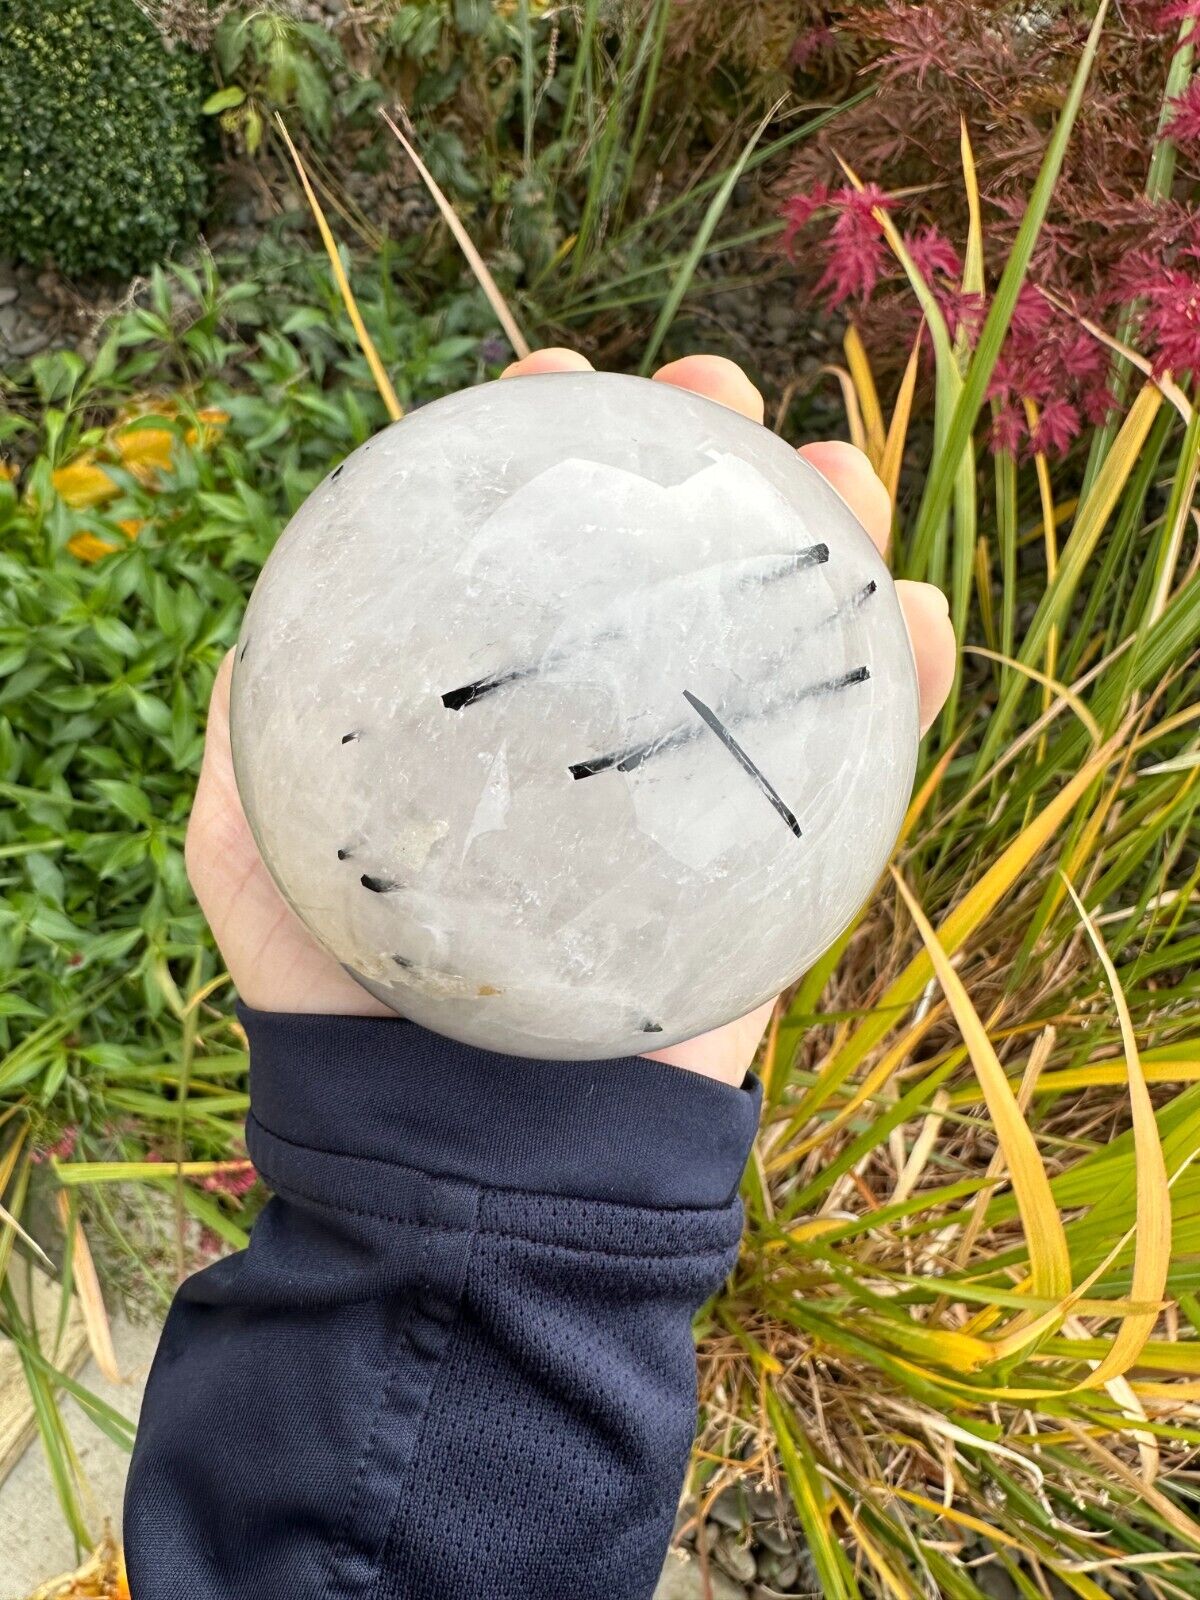 Natural Black Tourmaline Ball Crystal Quartz Sphere Healing Stone 1037g/36.6oz